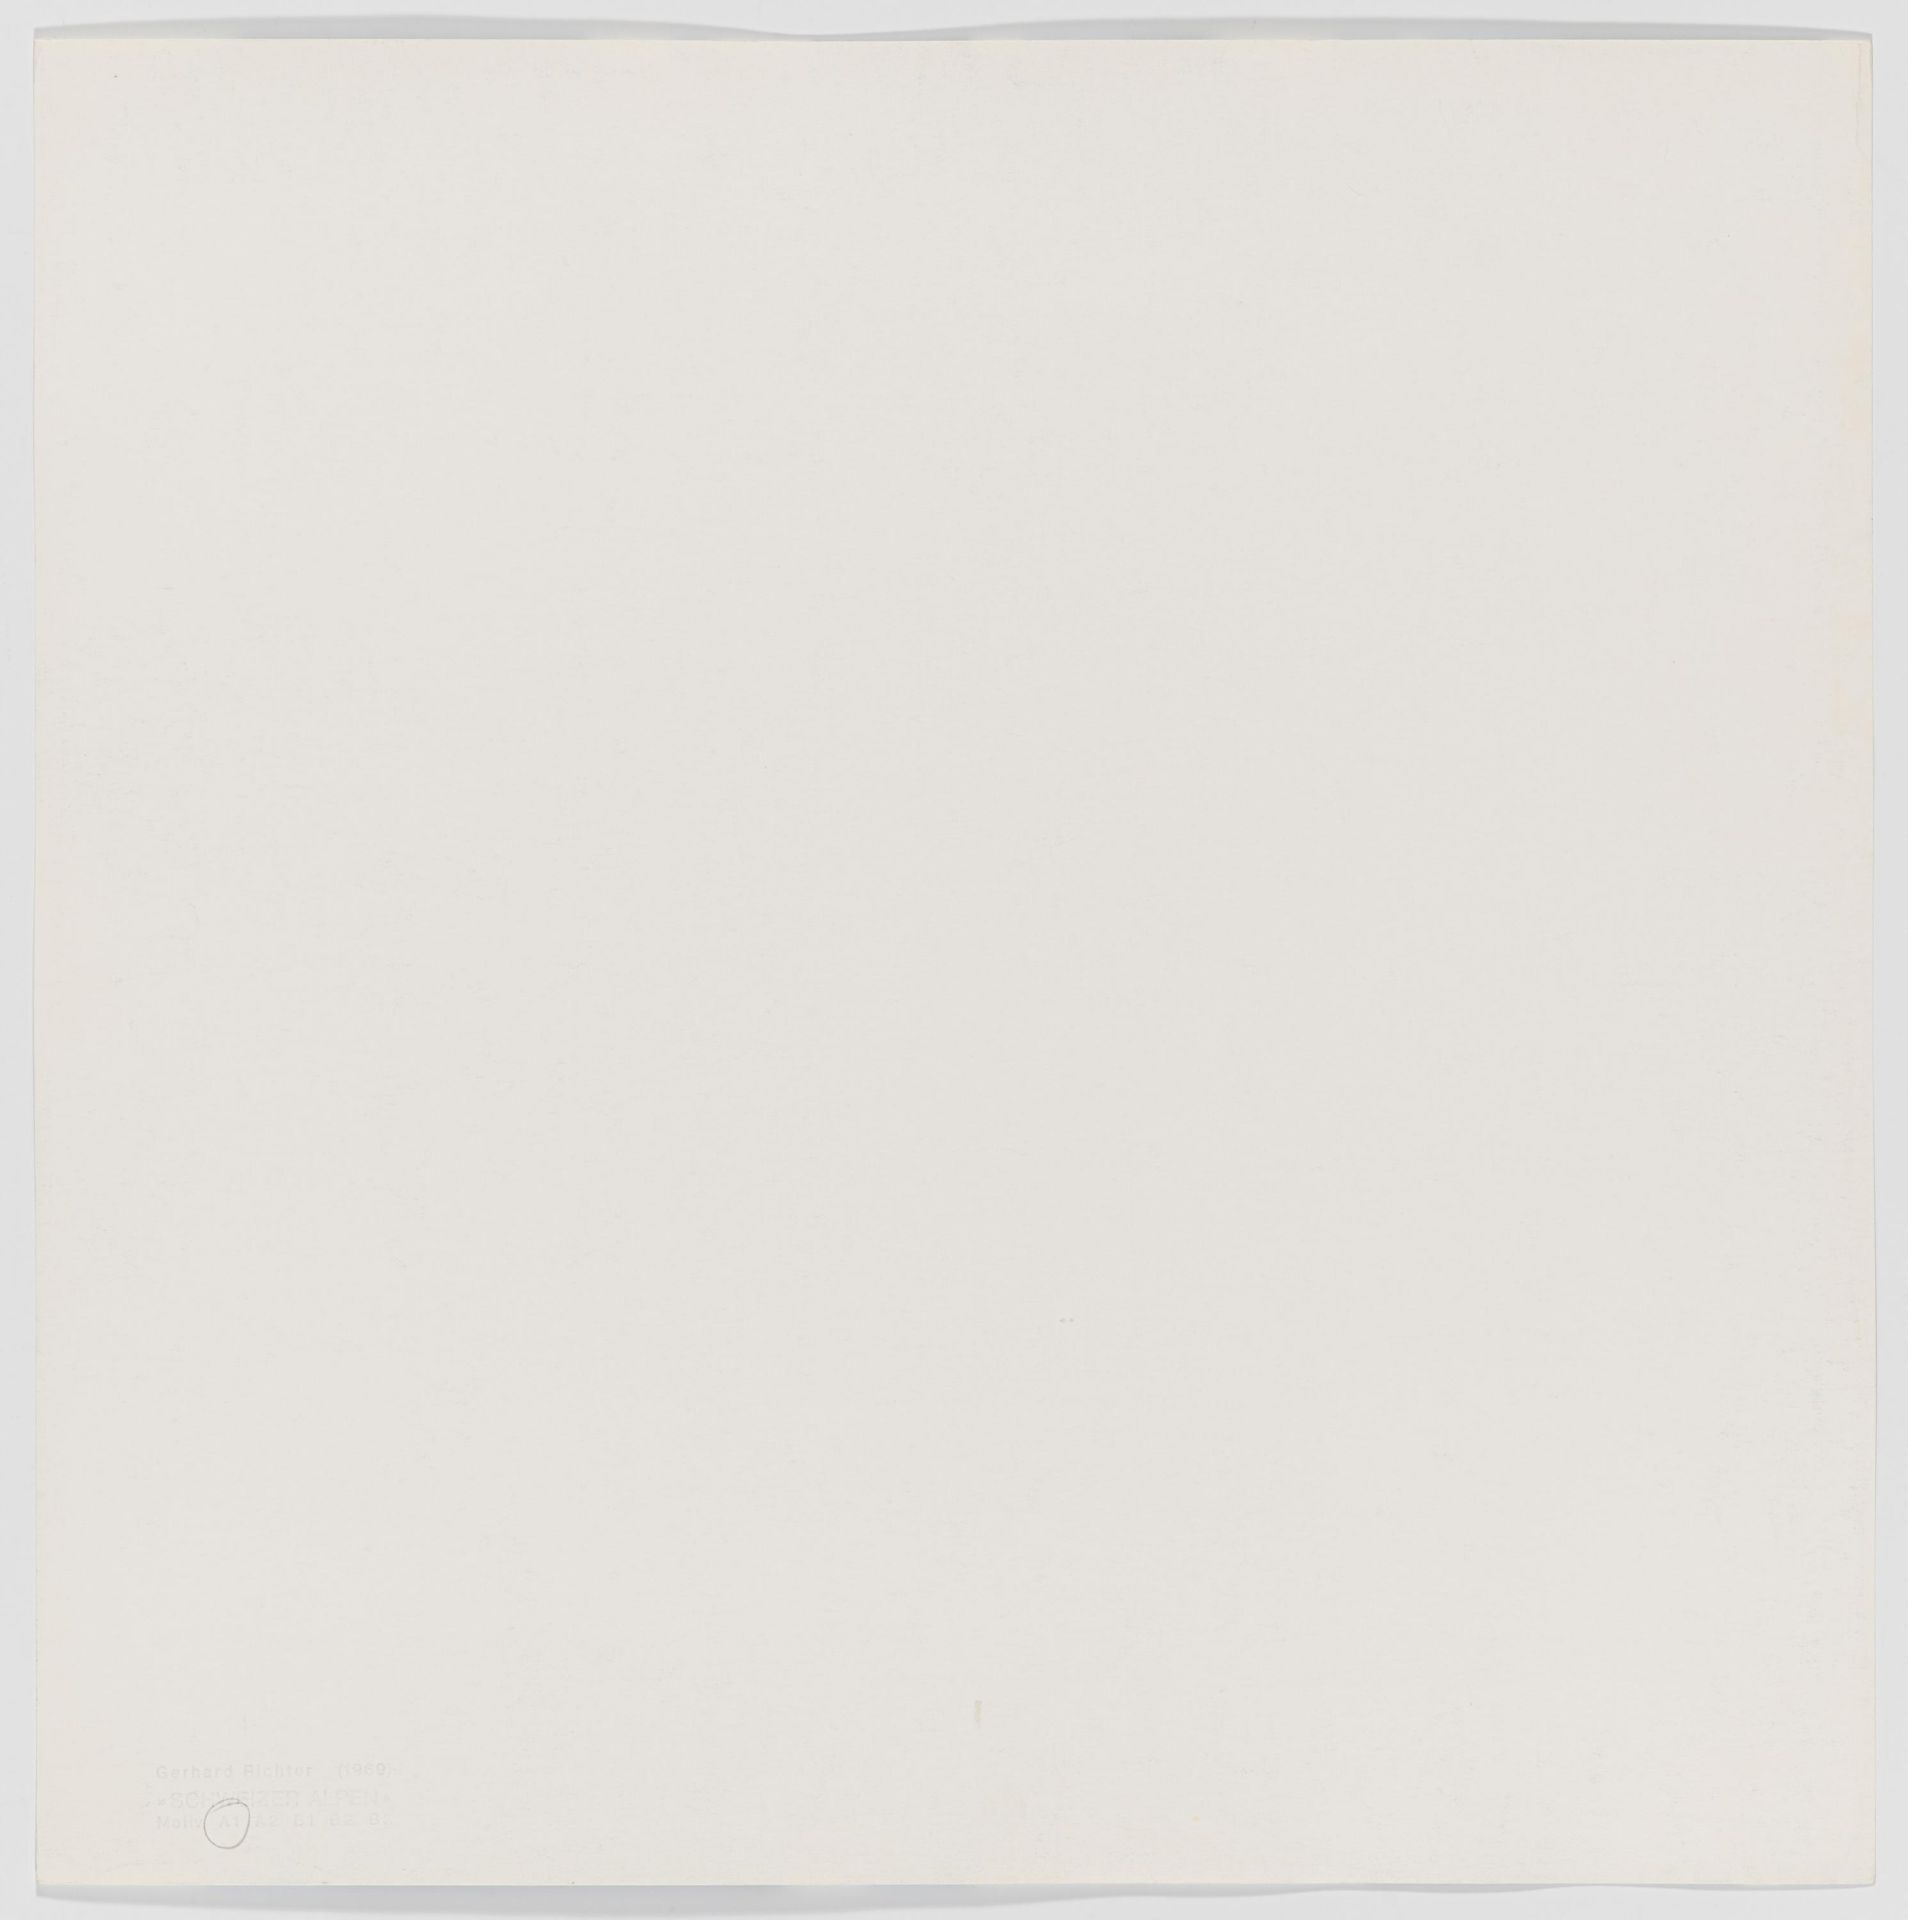 Gerhard Richter: Schweizer Alpen I (A1) - Image 3 of 4